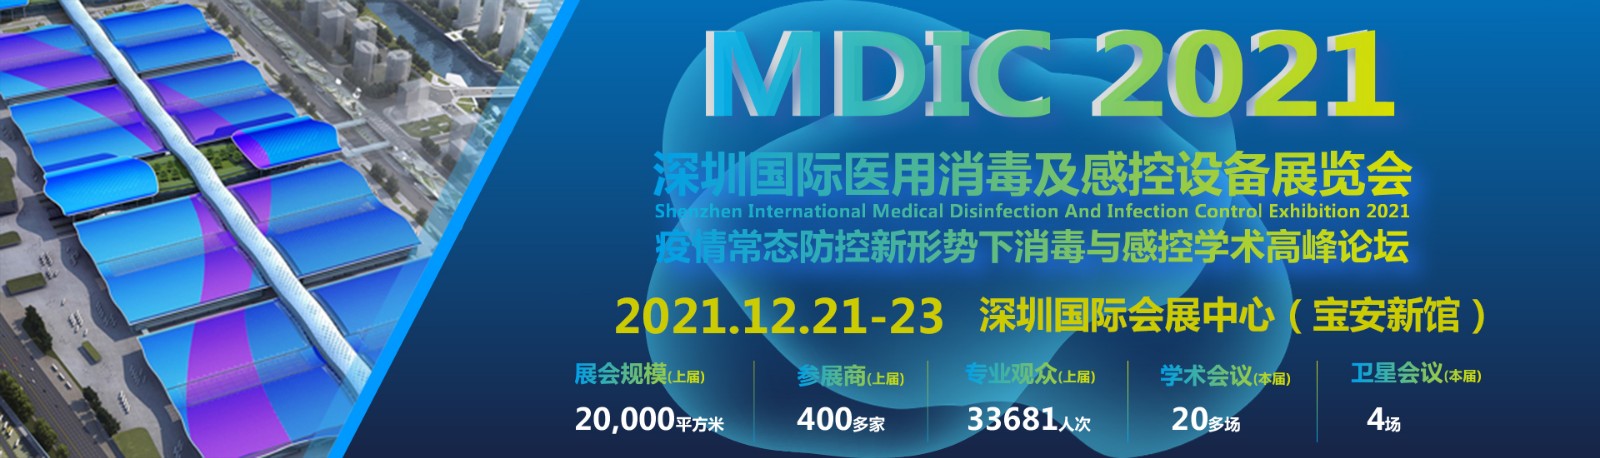 MDIC2021深圳国际医用消毒及感控设备展览会展会介绍